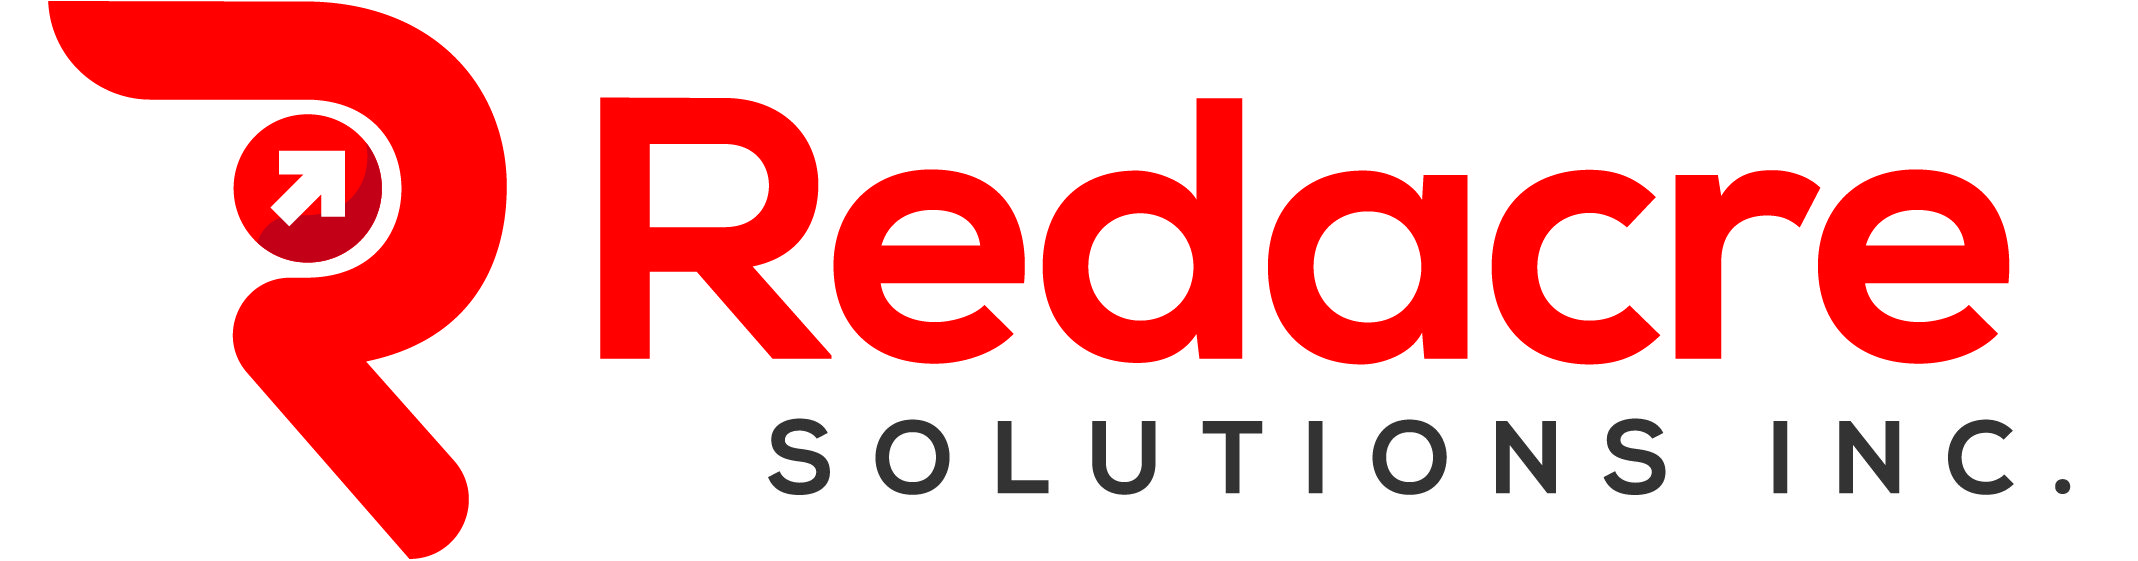 redacre solutions logo